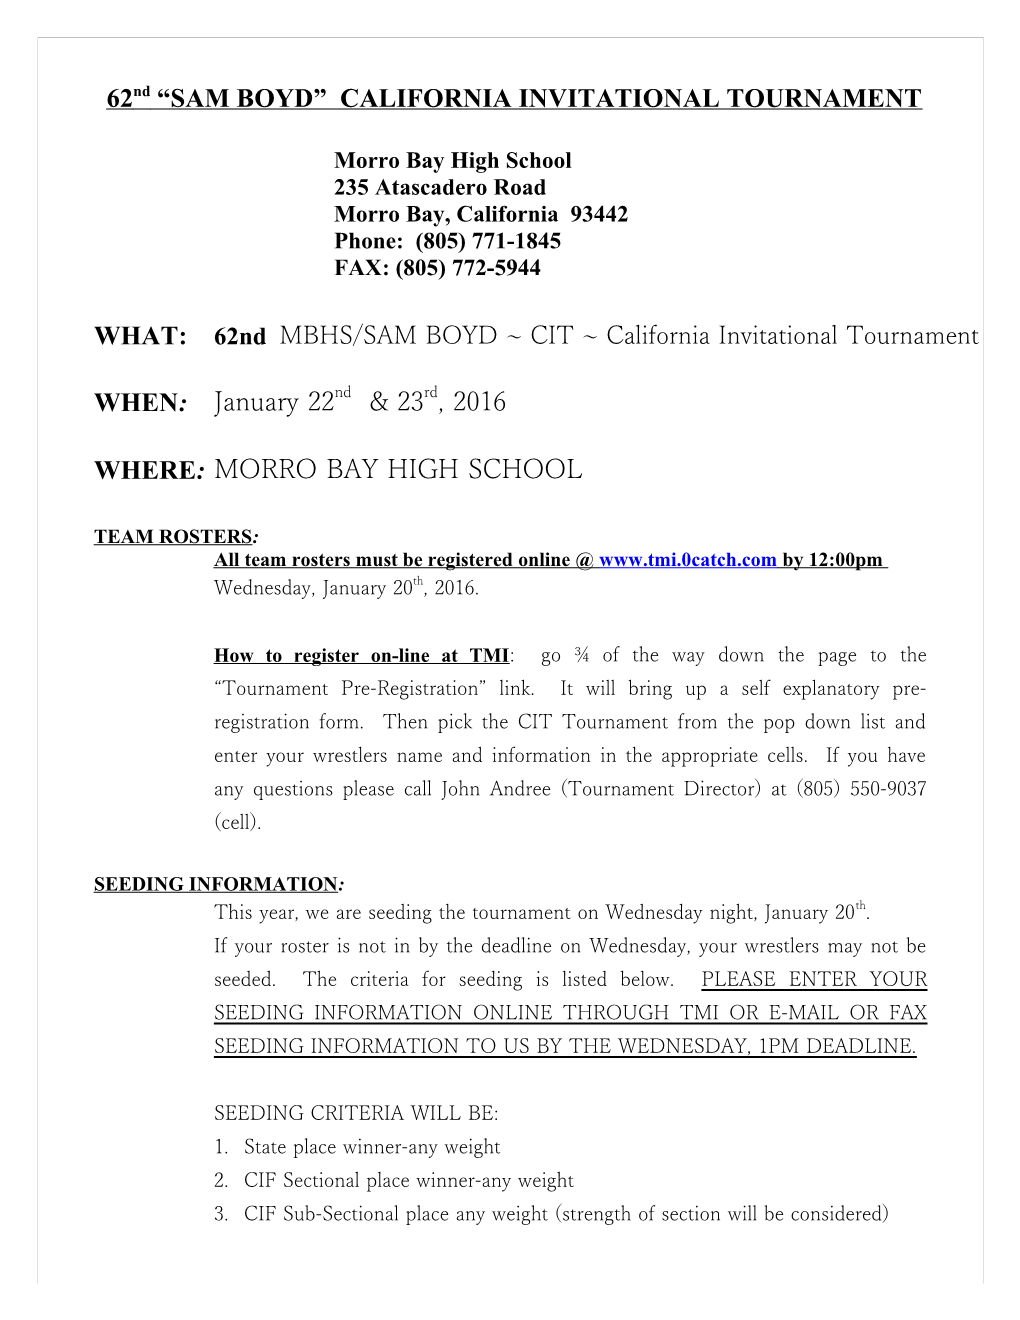 WHAT: 44TH Morro Bay High School/California Invitational Wrestling Tournament